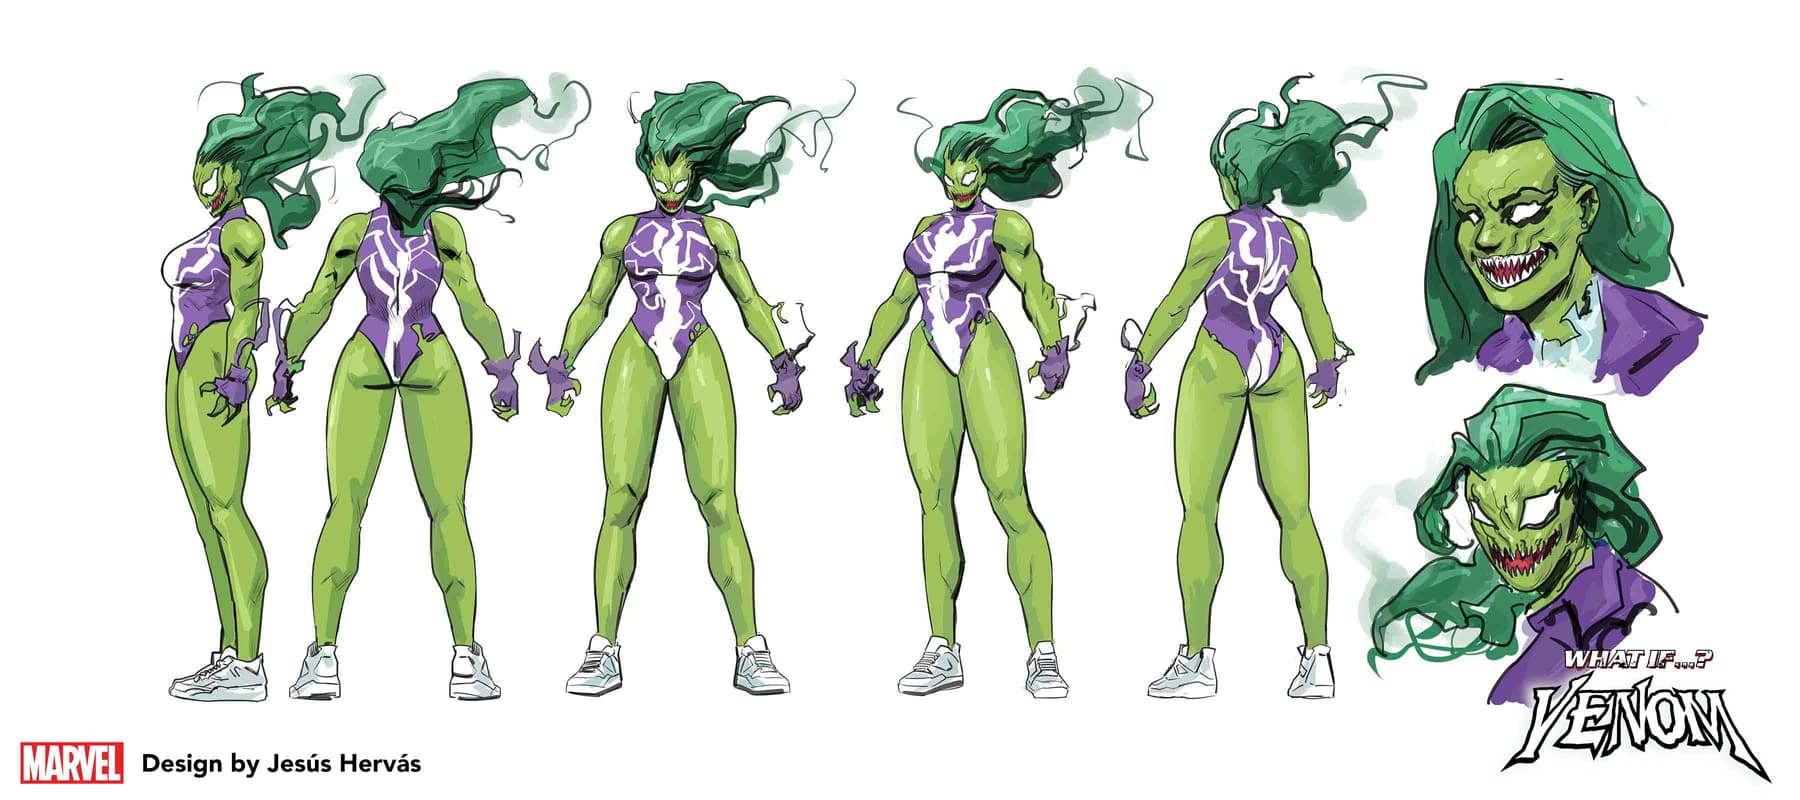 WHAT IF...? VENOM: She-Hulk character design sheet by Jesús Hervás